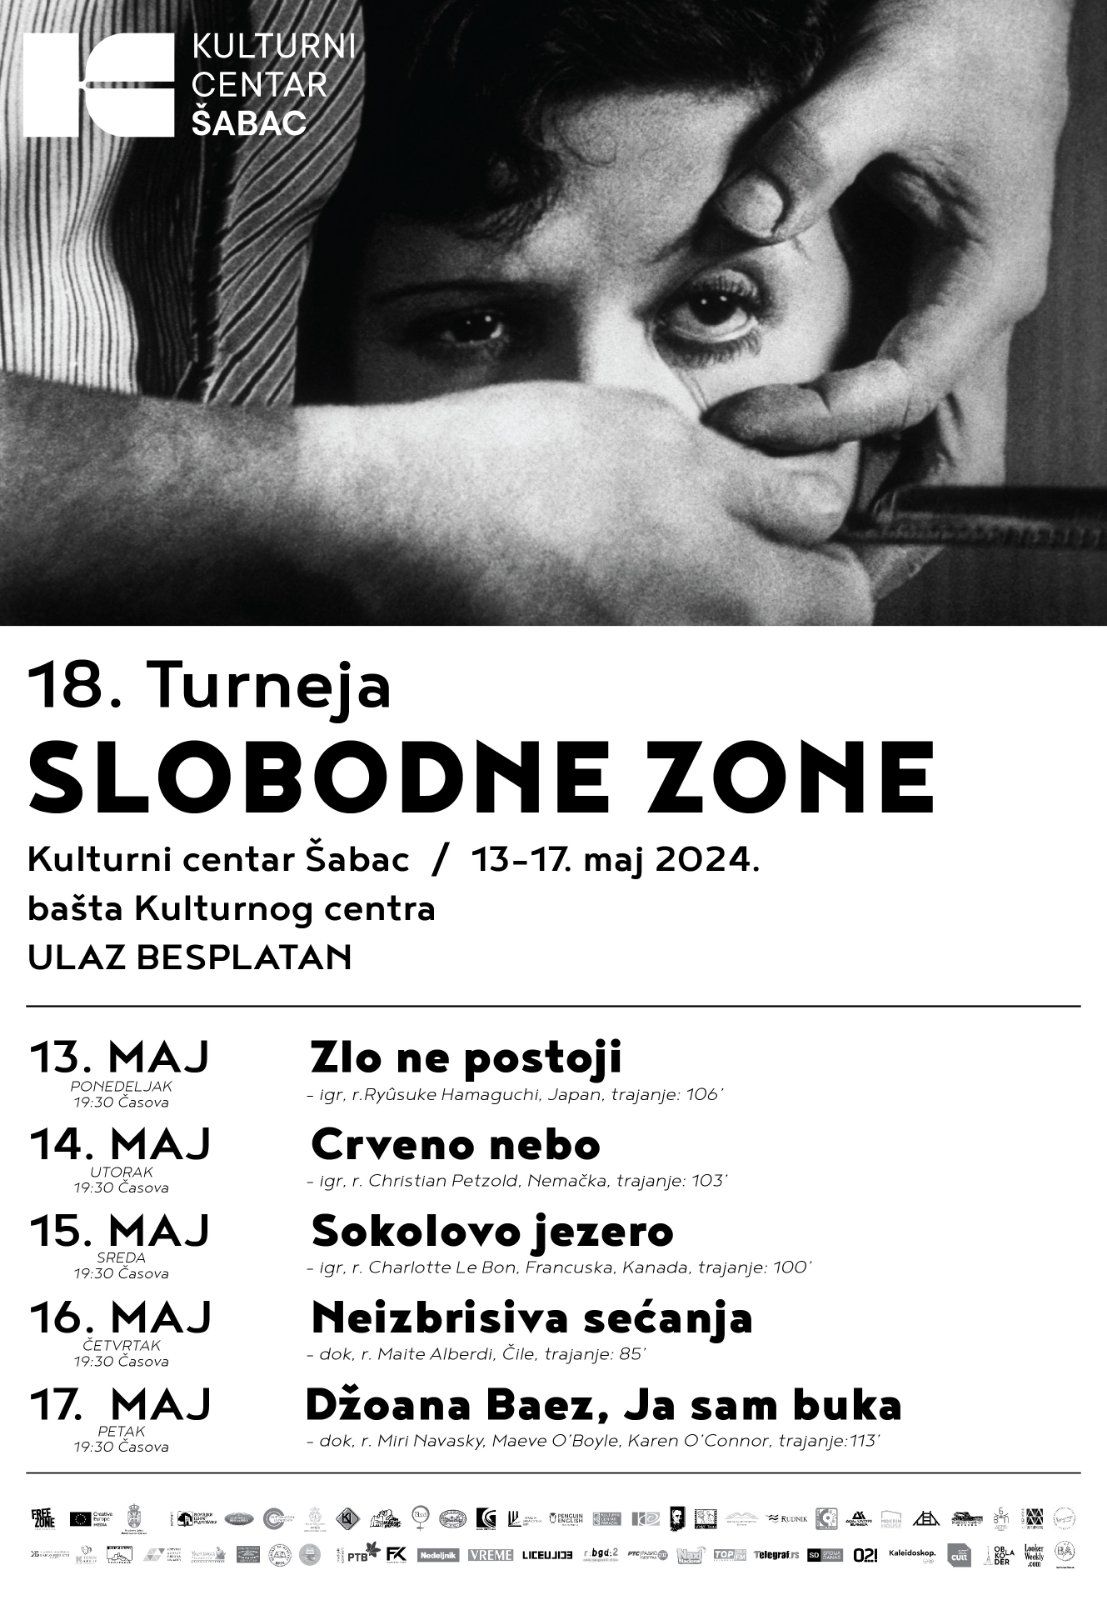 18. turneja slobodne zone / filmski festival slobodna zona dolazi kod vas!